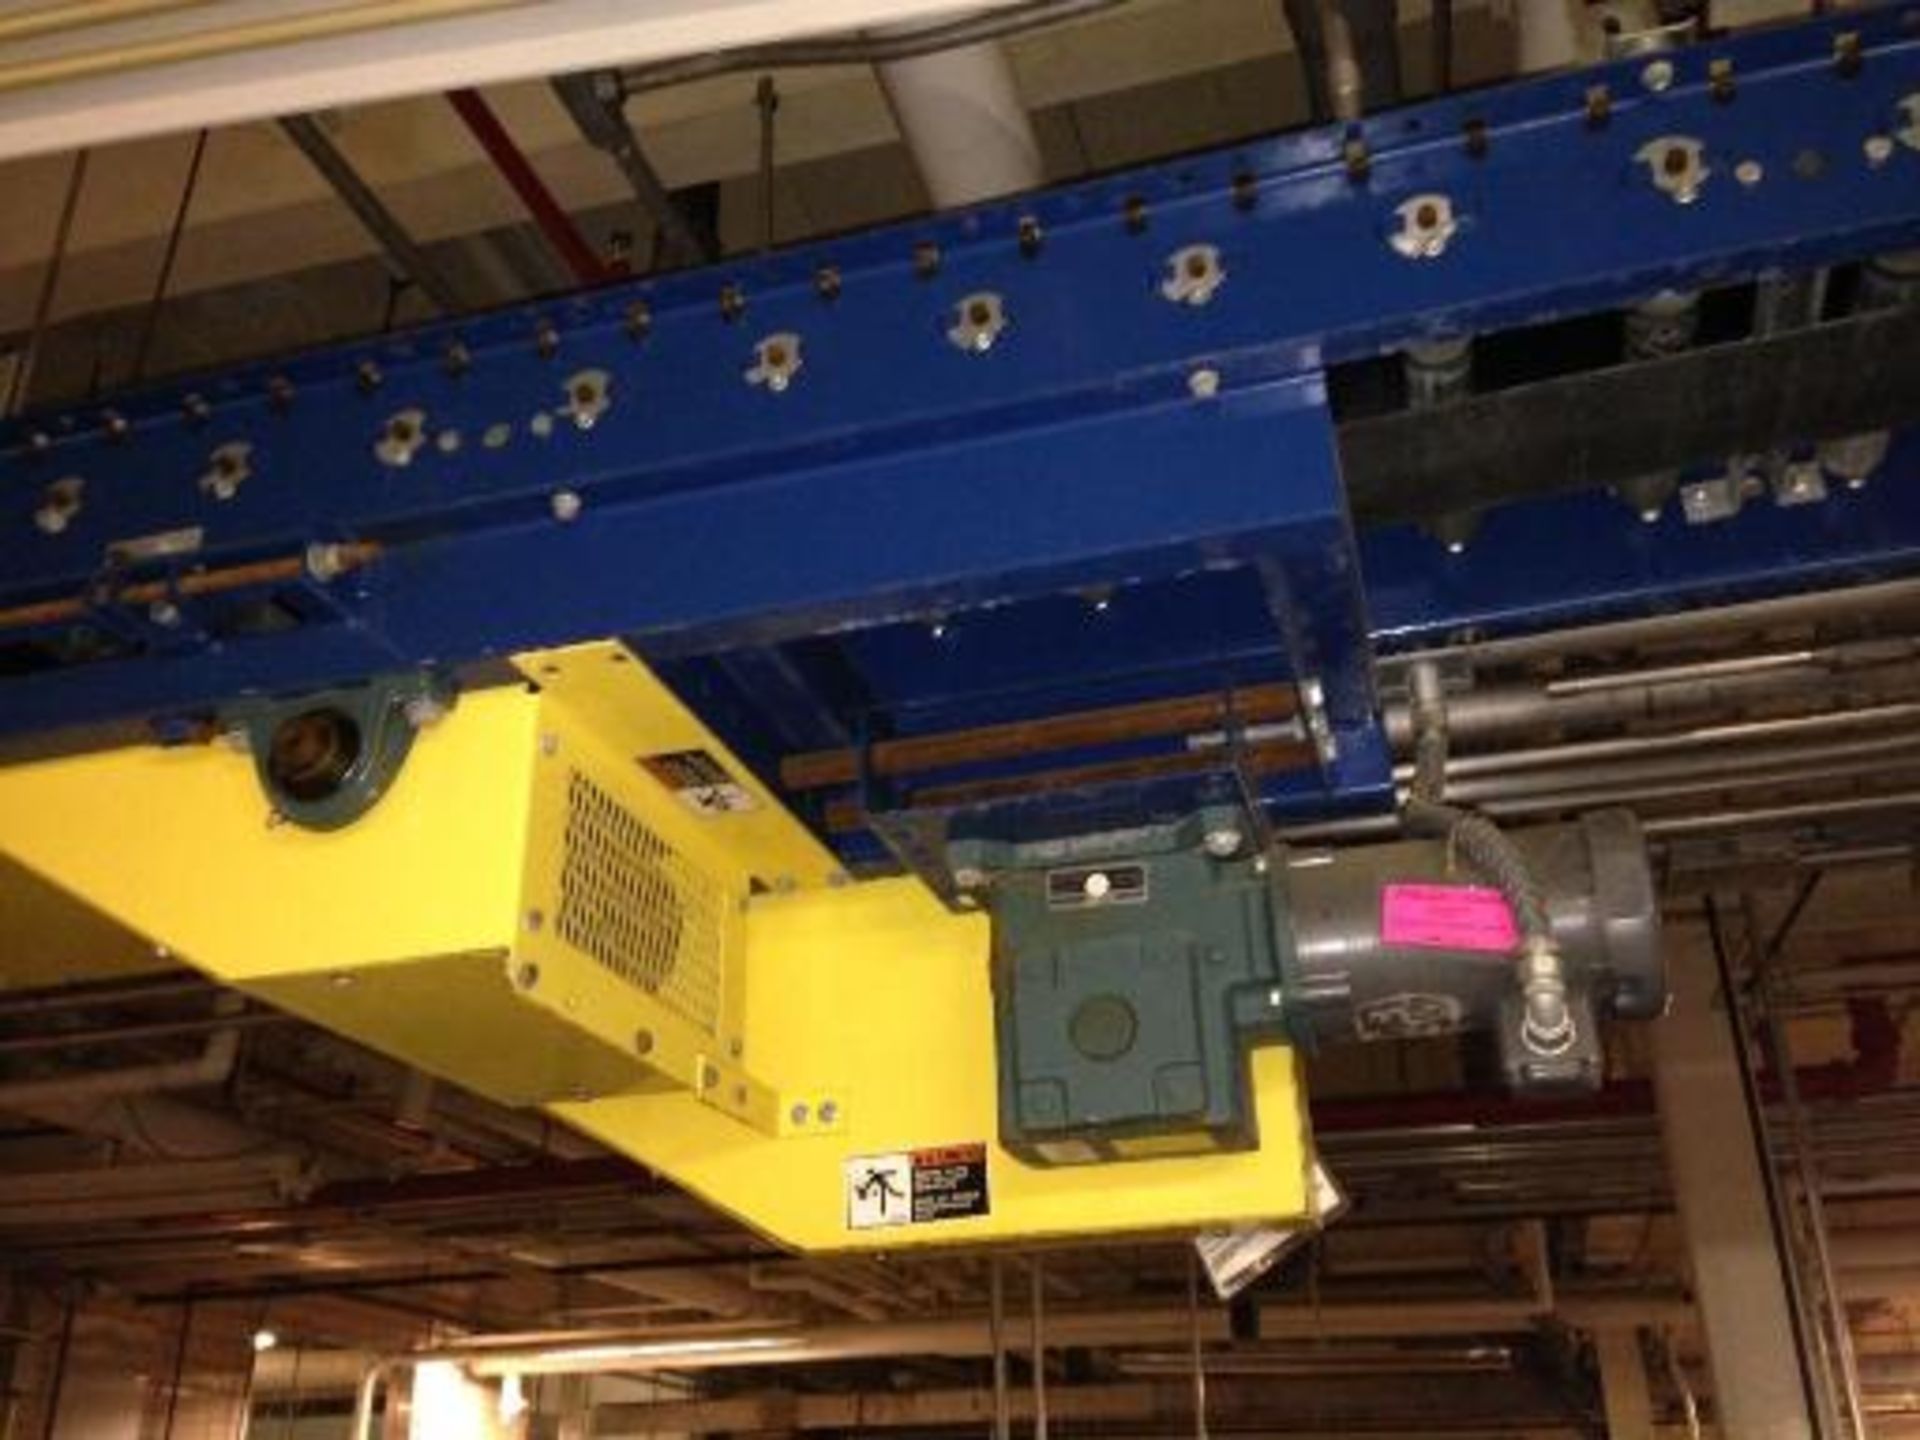 Versa, blue mild steel overhead power case conveyor 12 inch wide rubber belt approx. 100 feet - Image 3 of 9